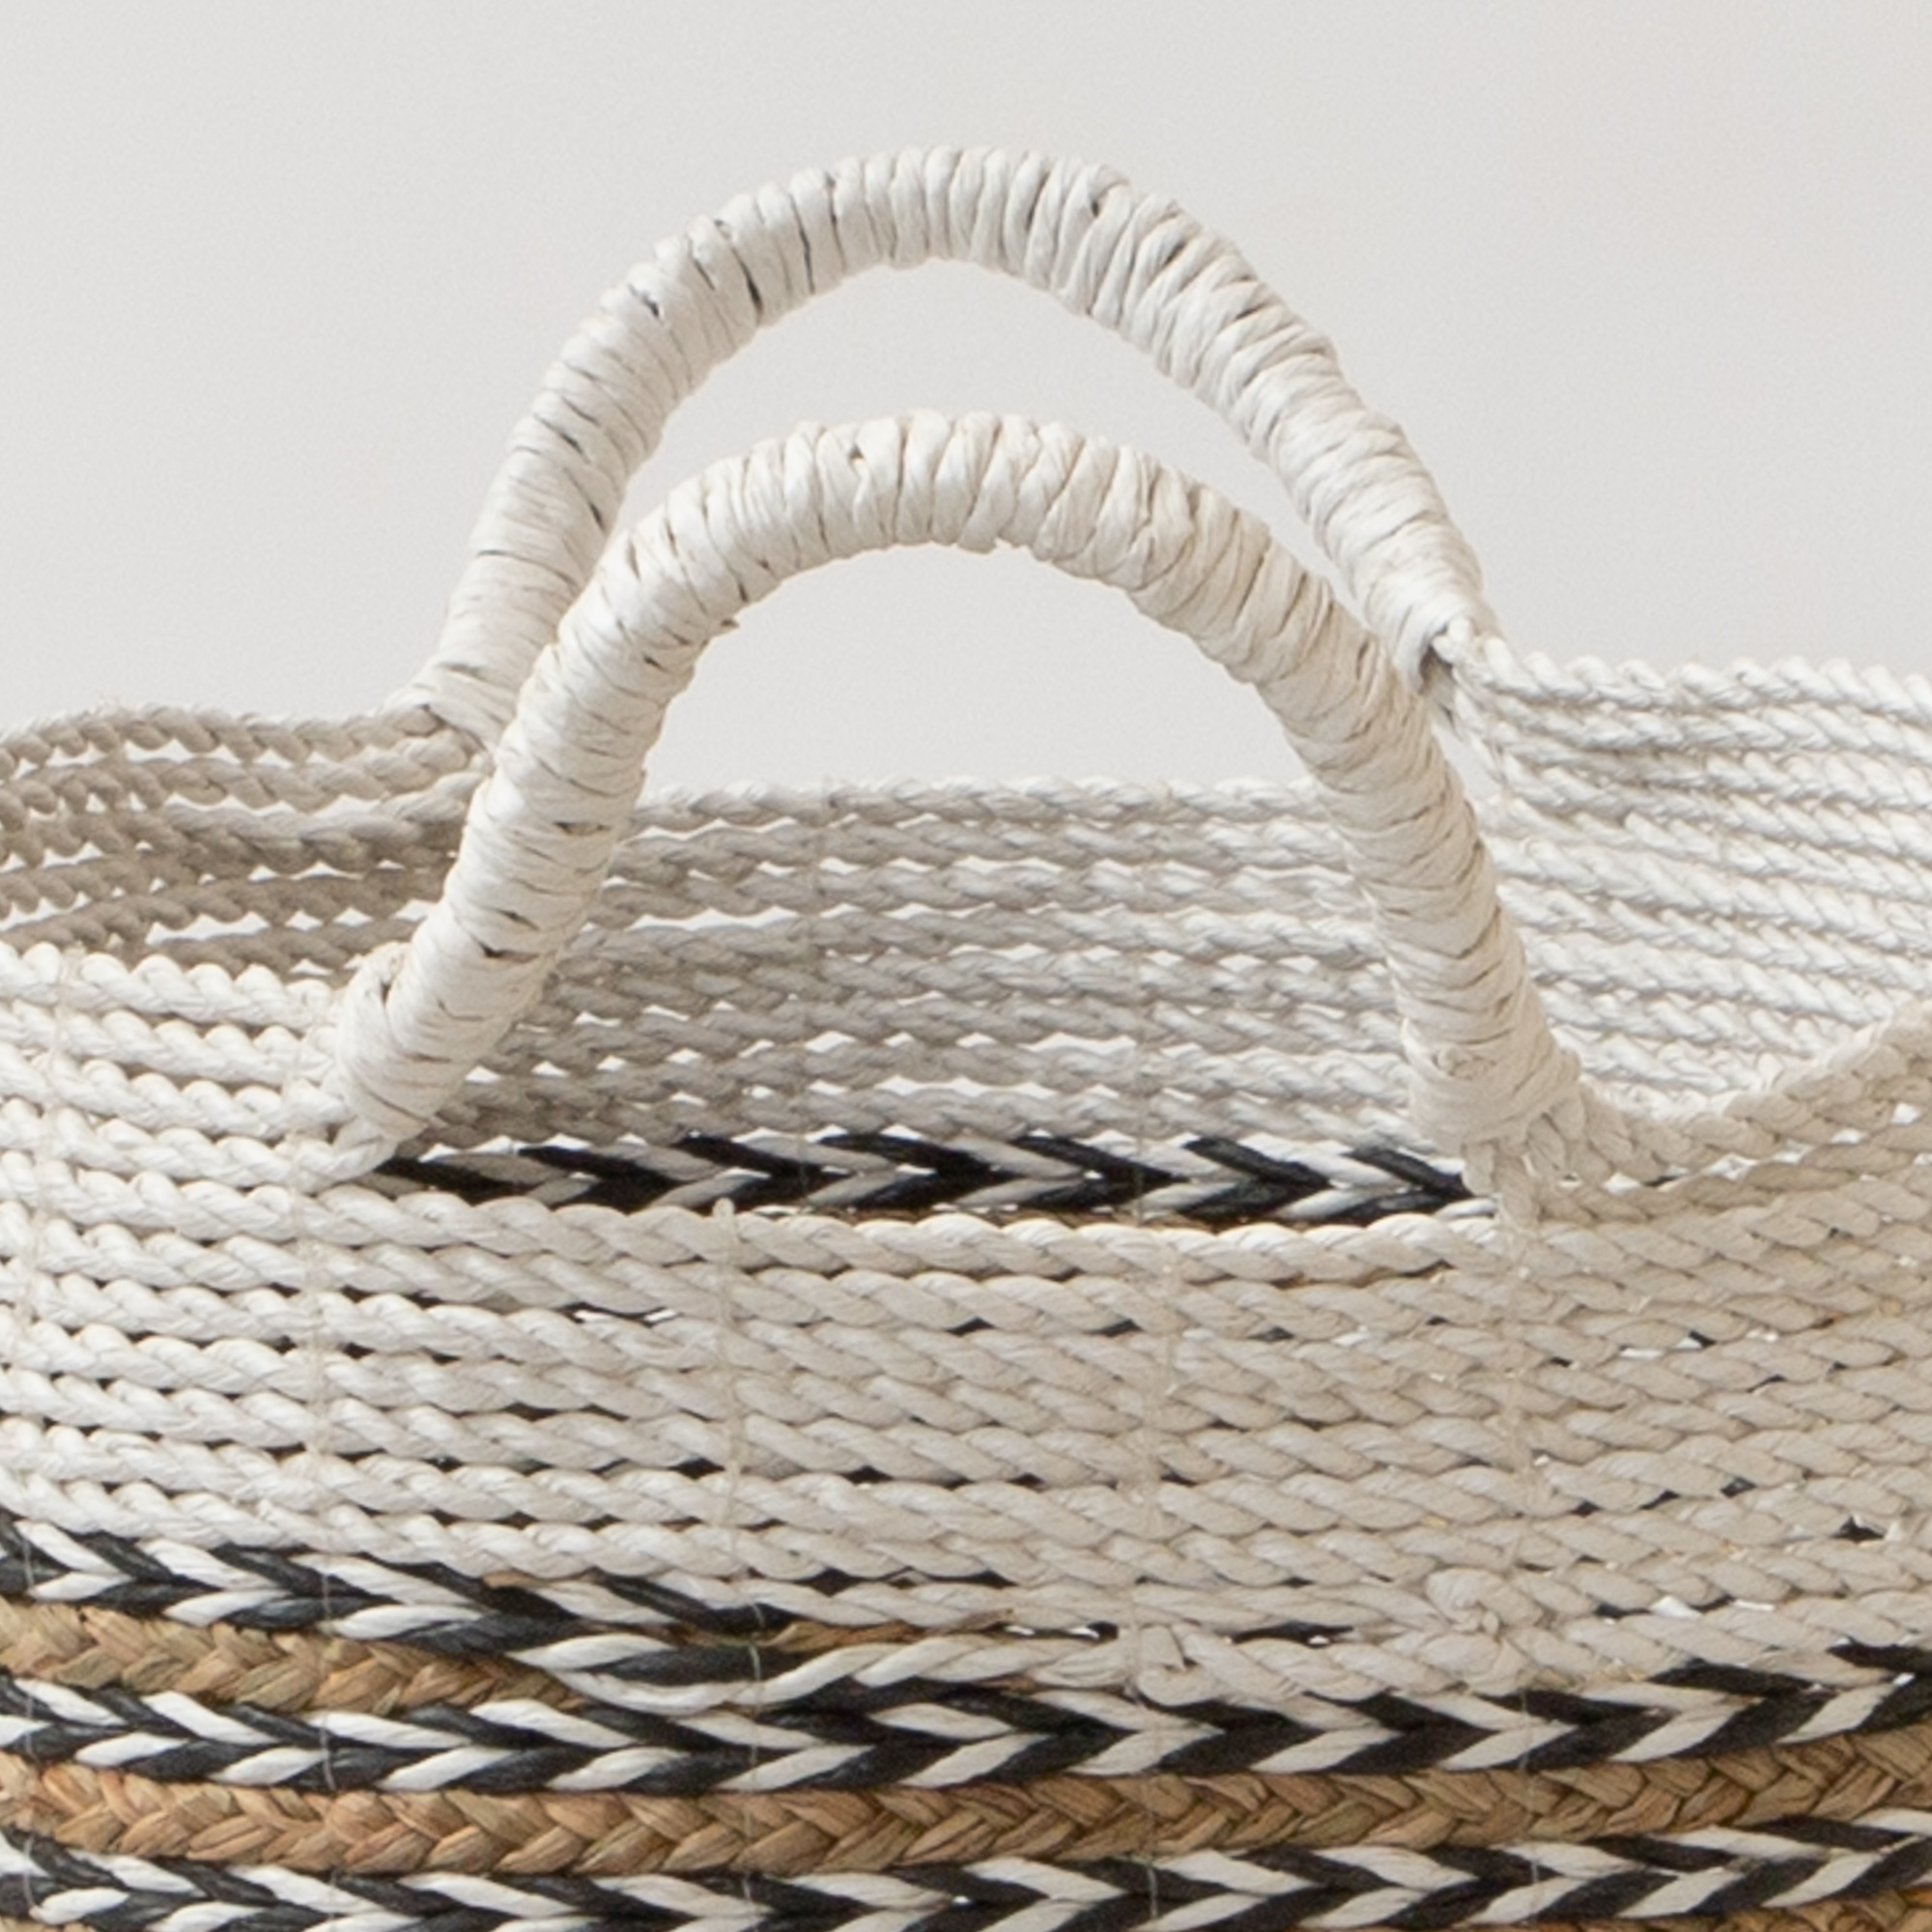 The Sayan House Handwoven Basket - Natural & Charcoal